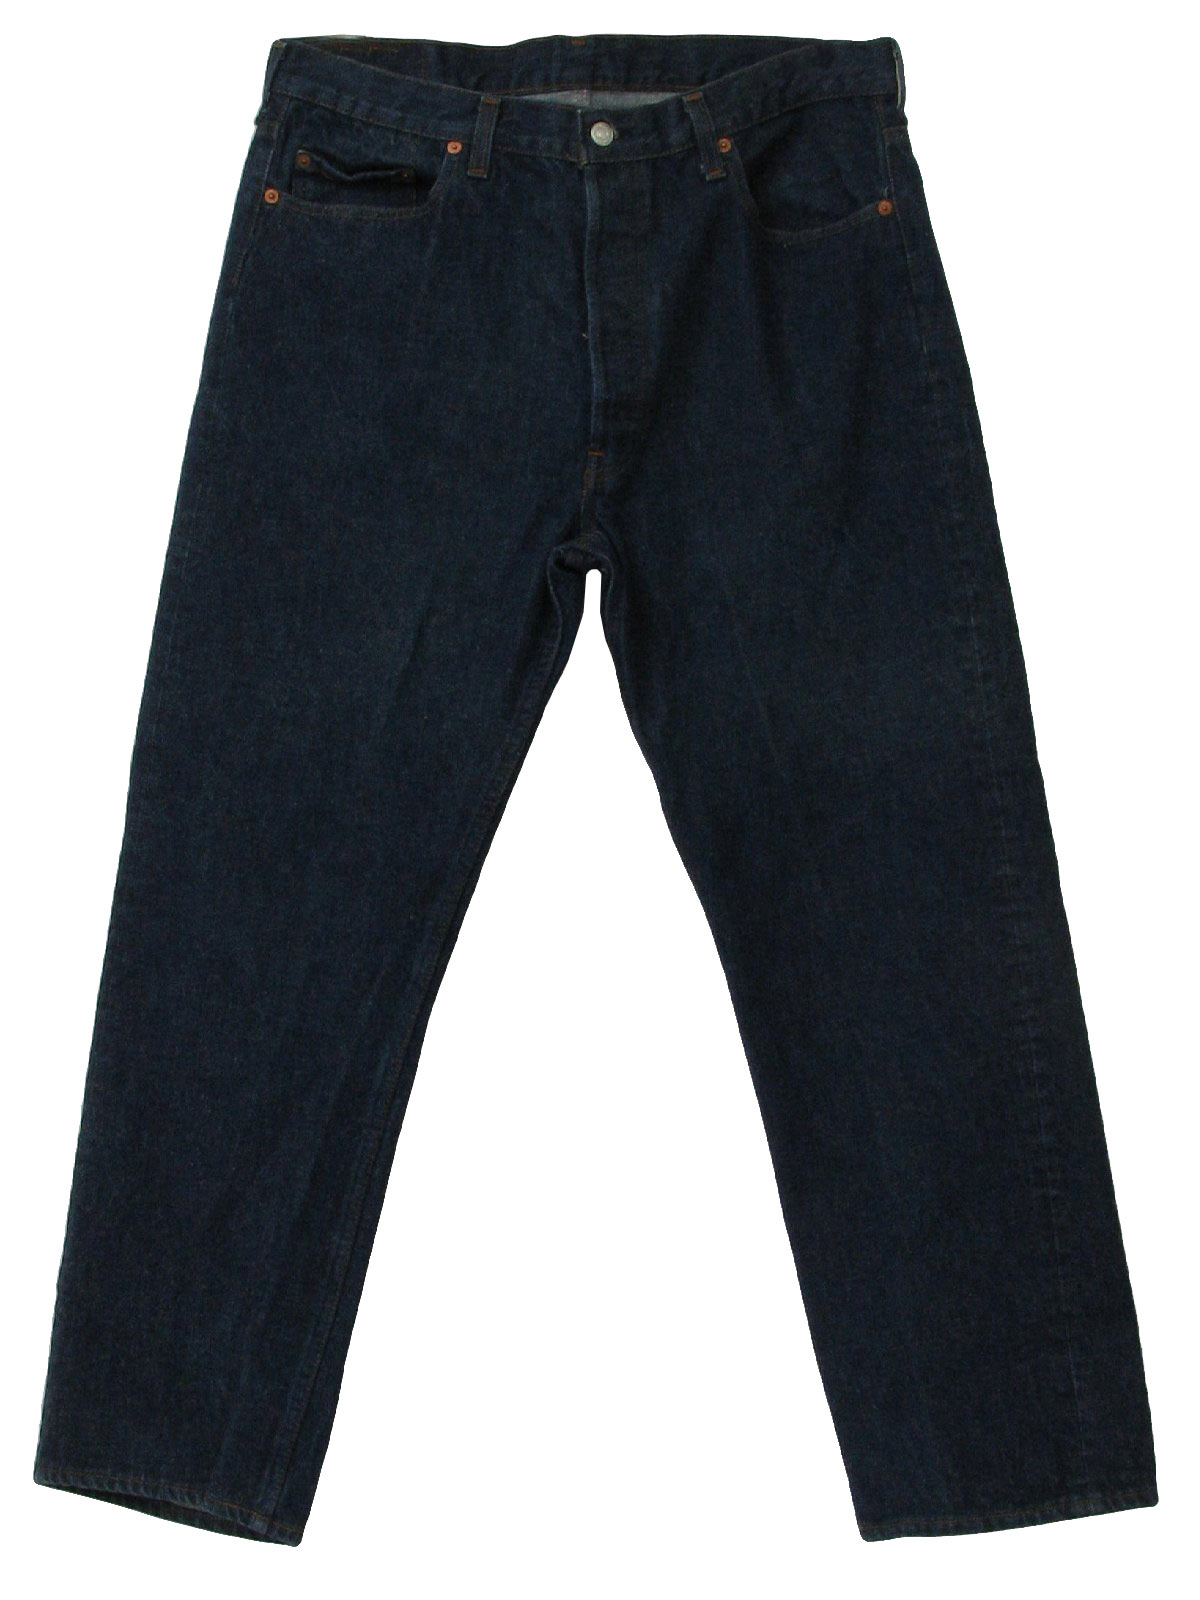 Levis 501 Eighties Vintage Pants: 80s -Levis 501- Mens dark blue cotton ...